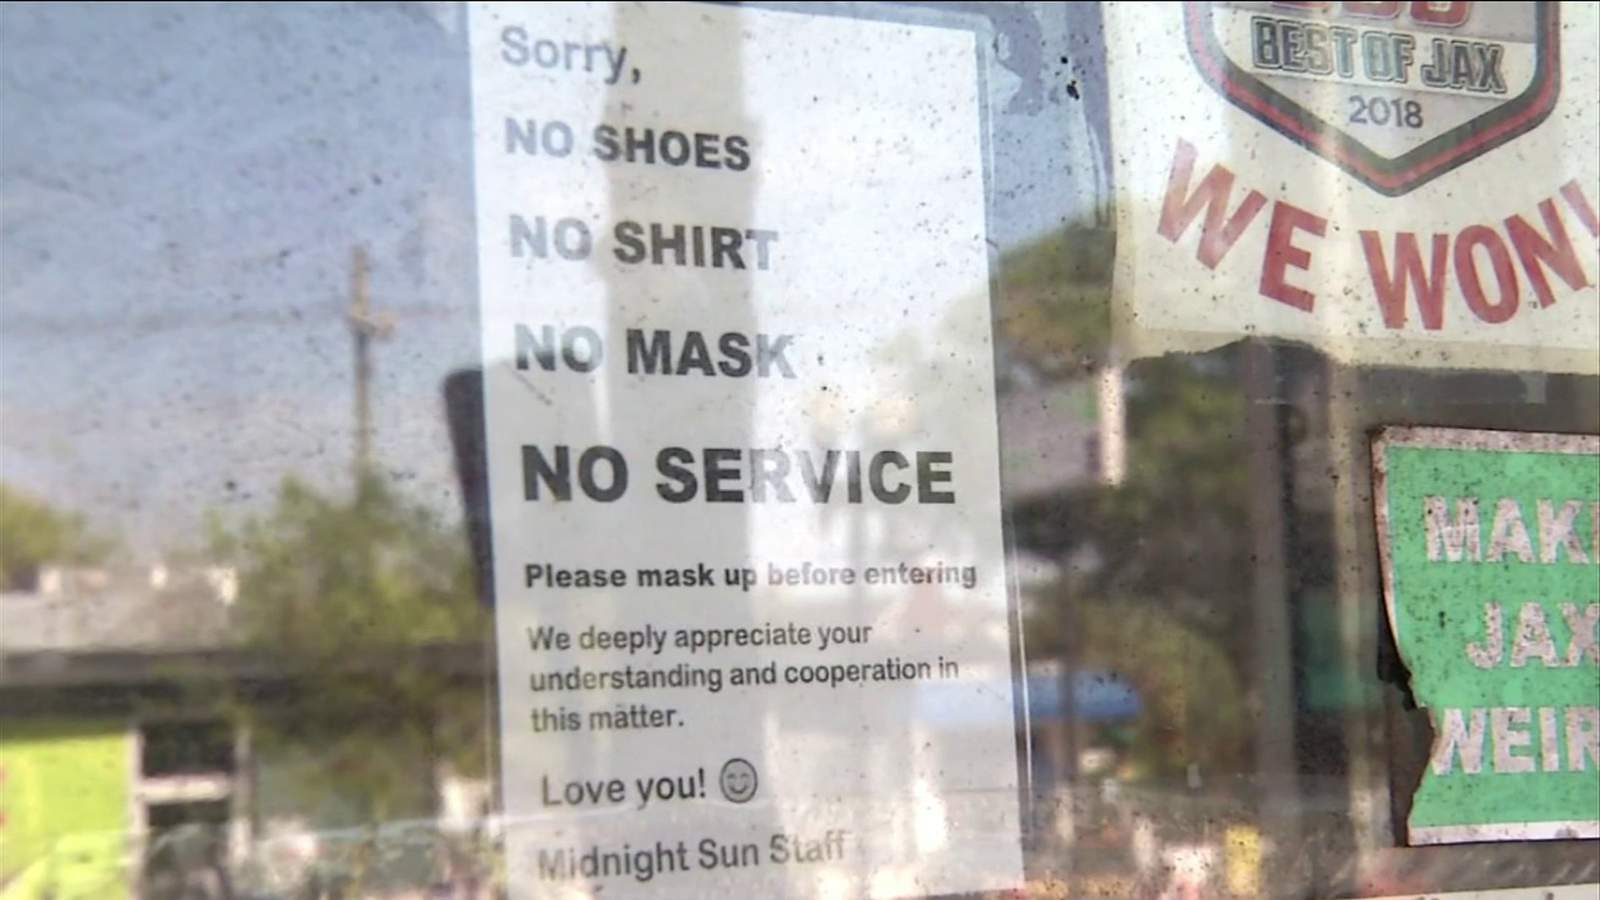 Some in Jacksonville will still wear masks despite city dropping mandate